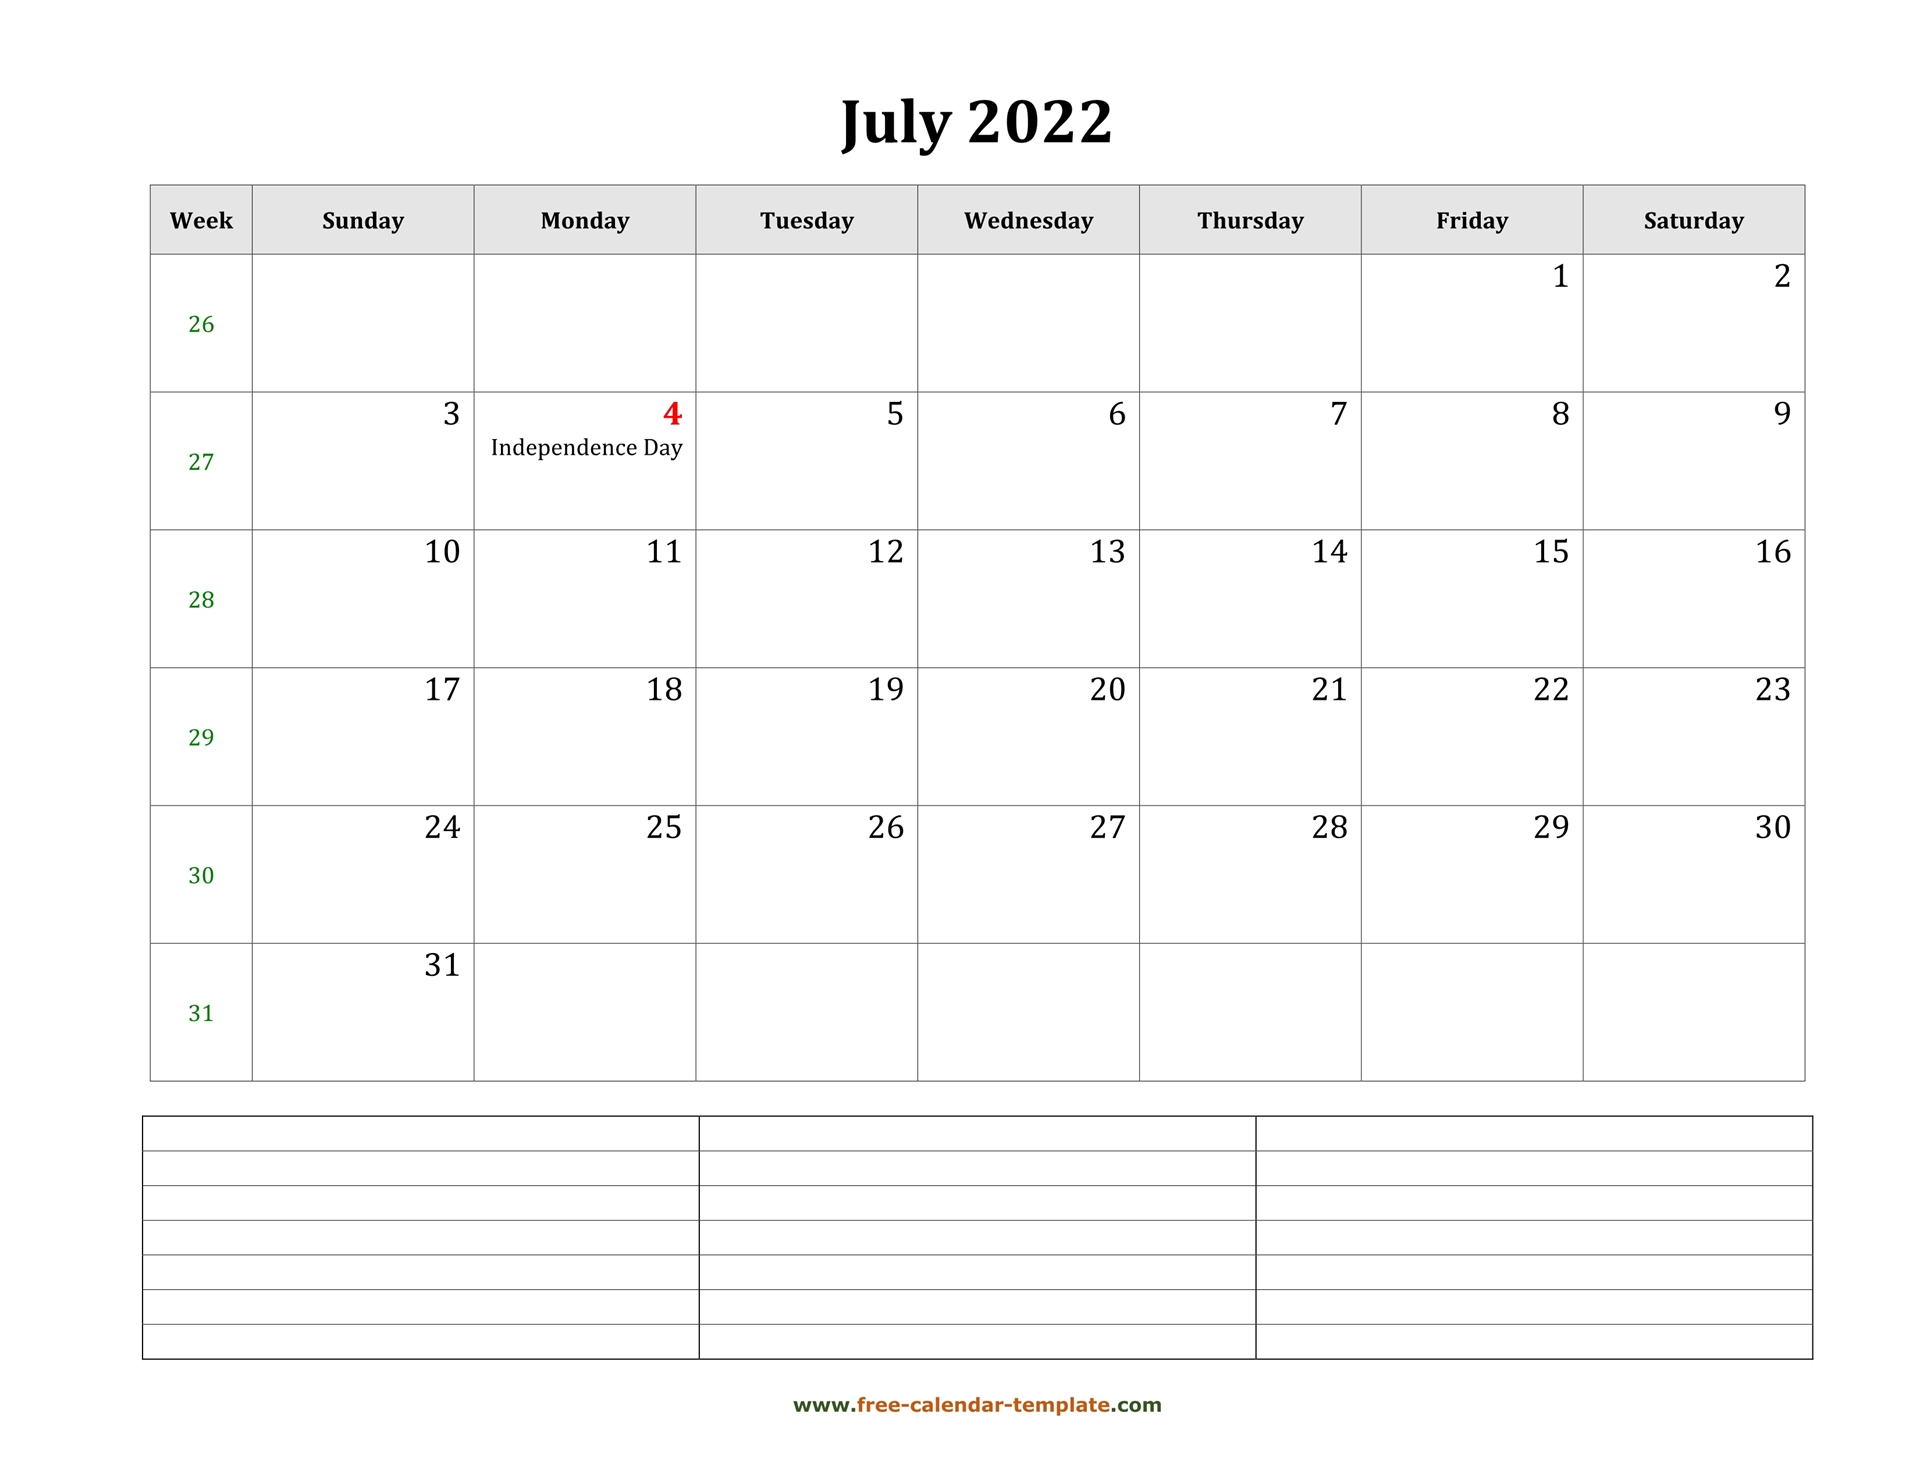 Catch Free Calendar July 2022